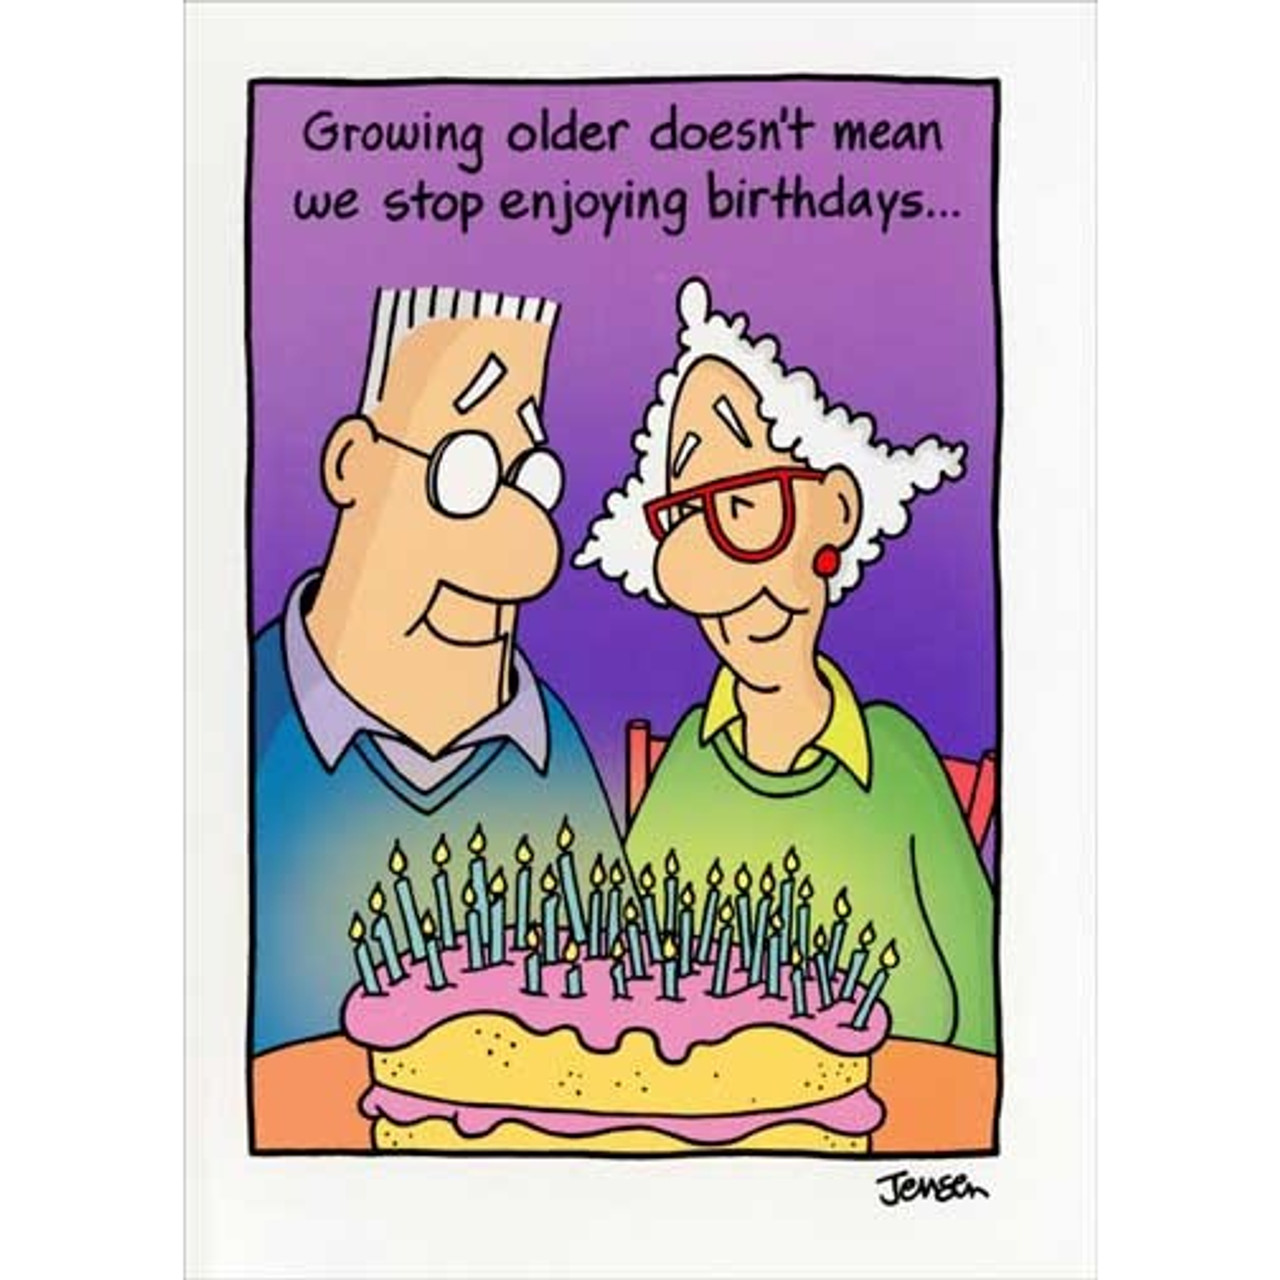 Stop Enjoying Birthdays Funny / Humorous Birthday Card | PaperCards.com